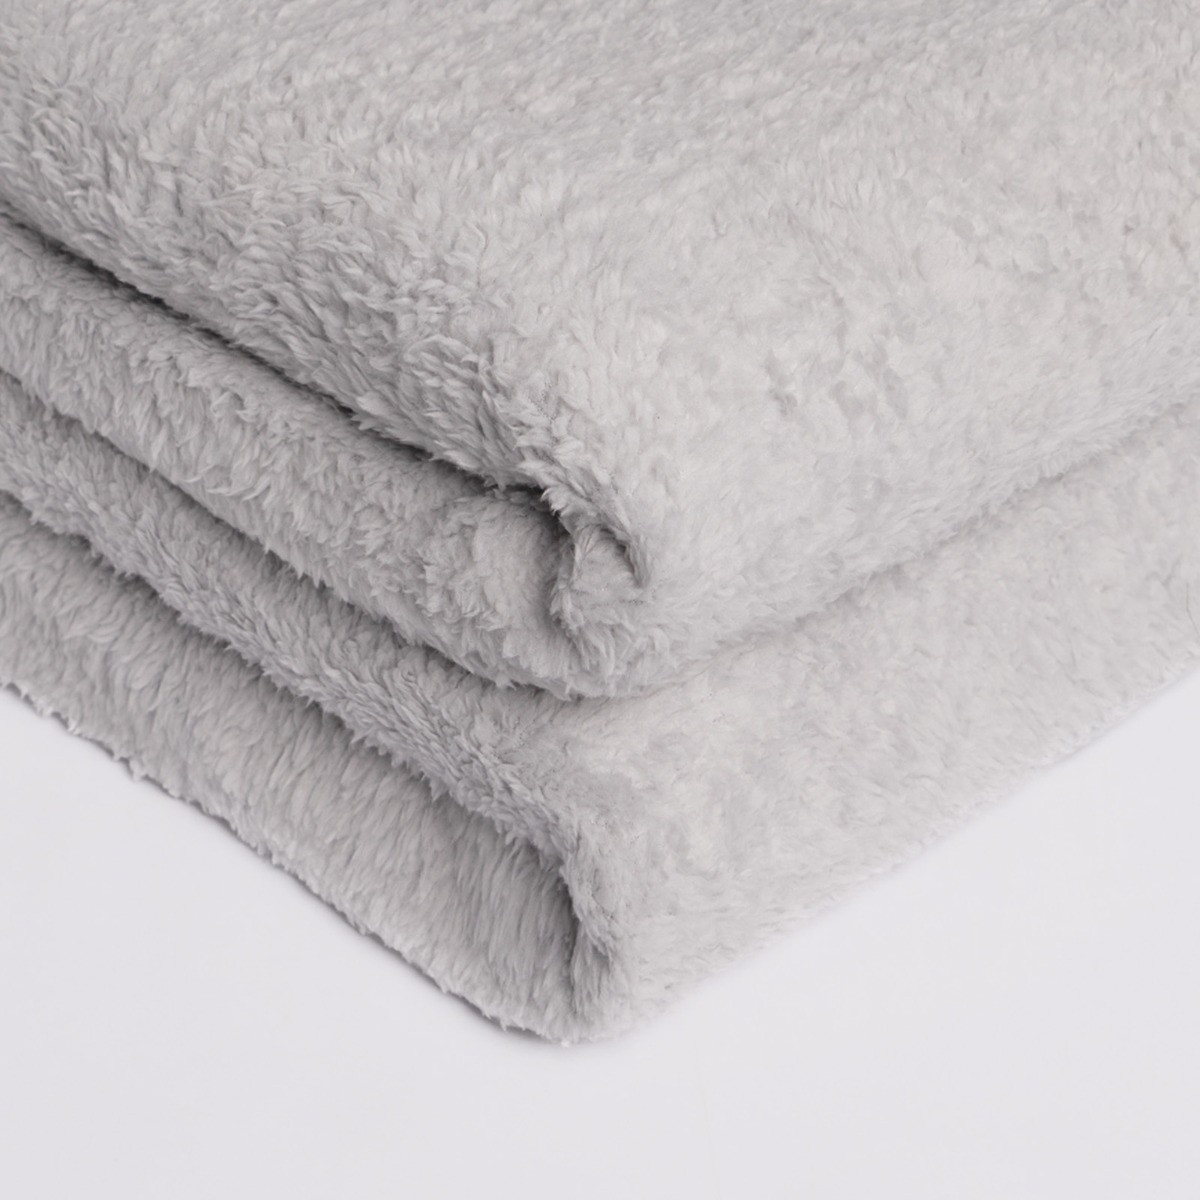 Brentfords Teddy Fleece Blanket Soft Throw Over Bed, Silver Grey - 200 x 240cm>